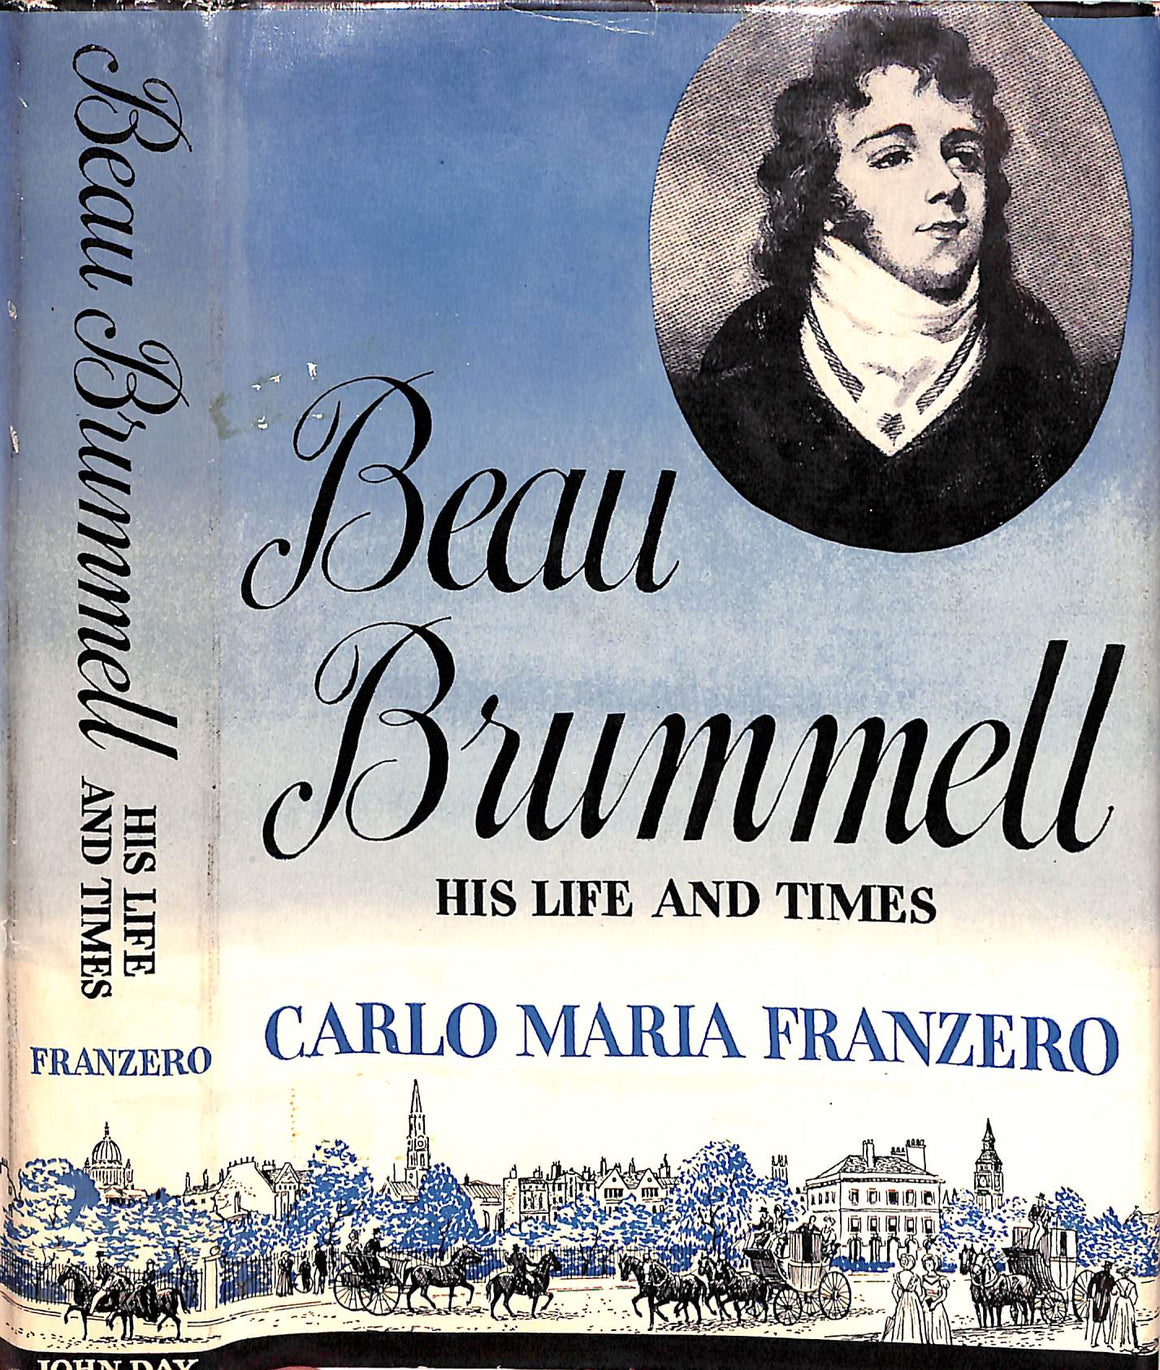 "Beau Brummell His Life And Times" 1958 FRANZERO, Carlo Maria